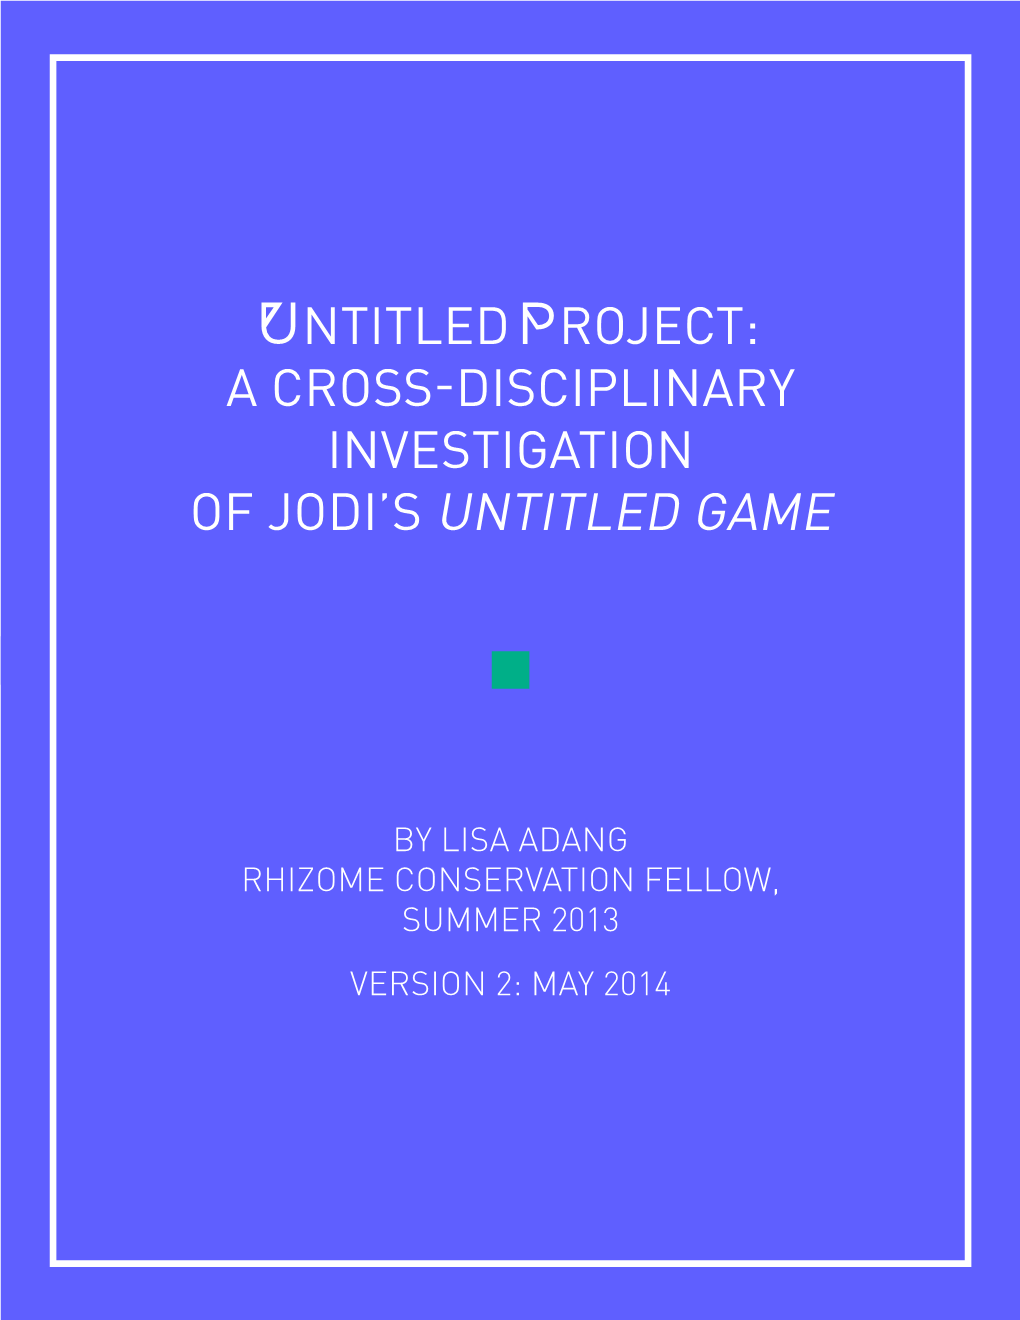 Of Jodi's Untitled Game